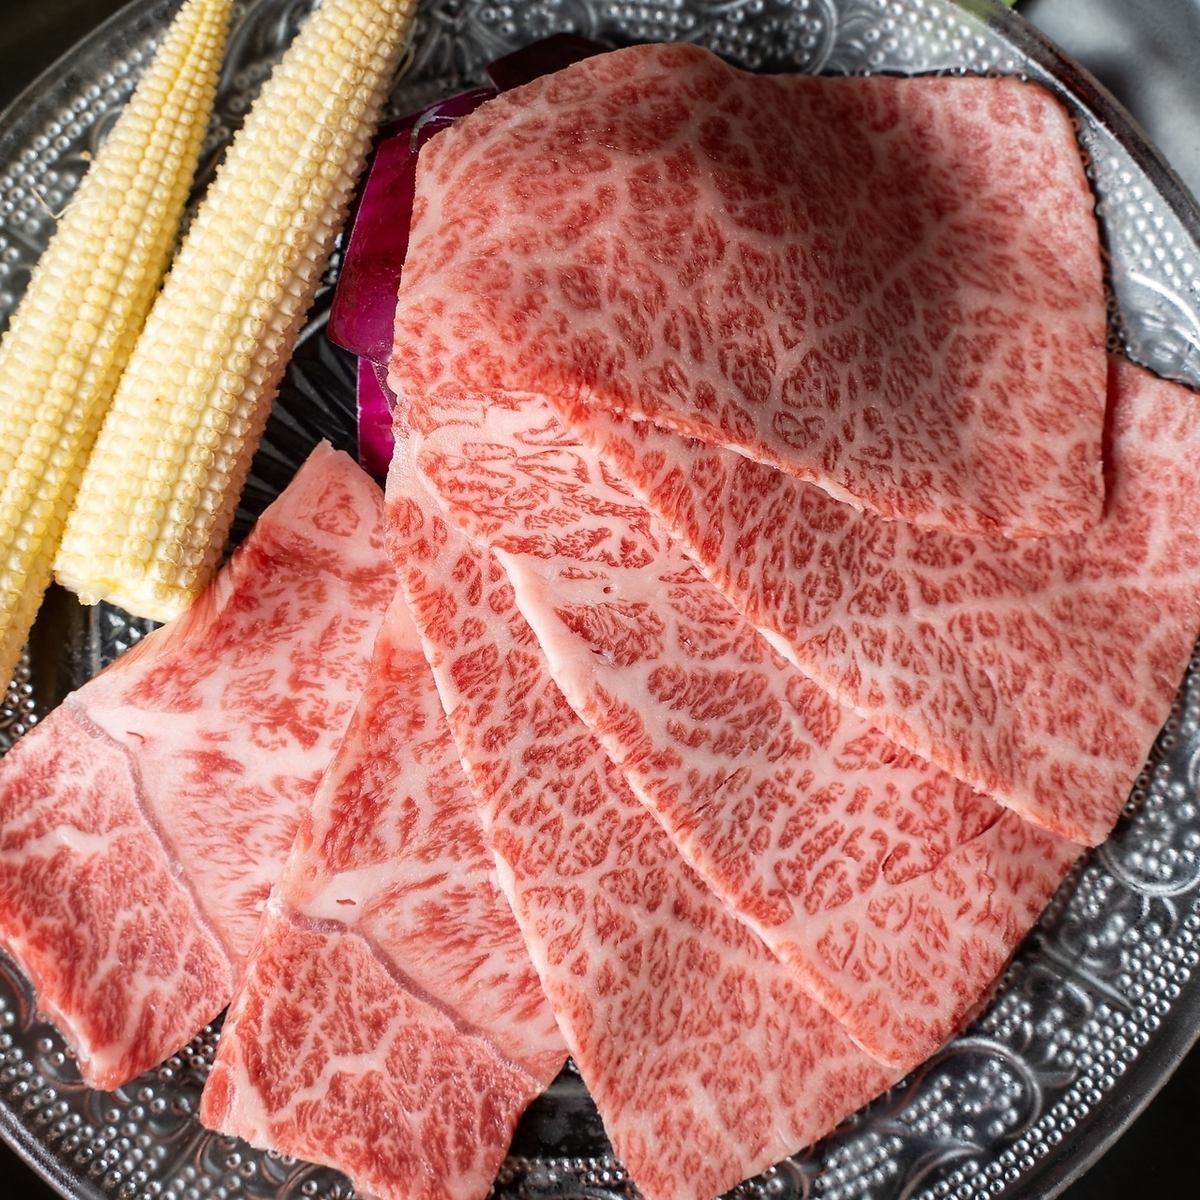 Please enjoy yakiniku using only high-quality A4 Hiroshima beef.